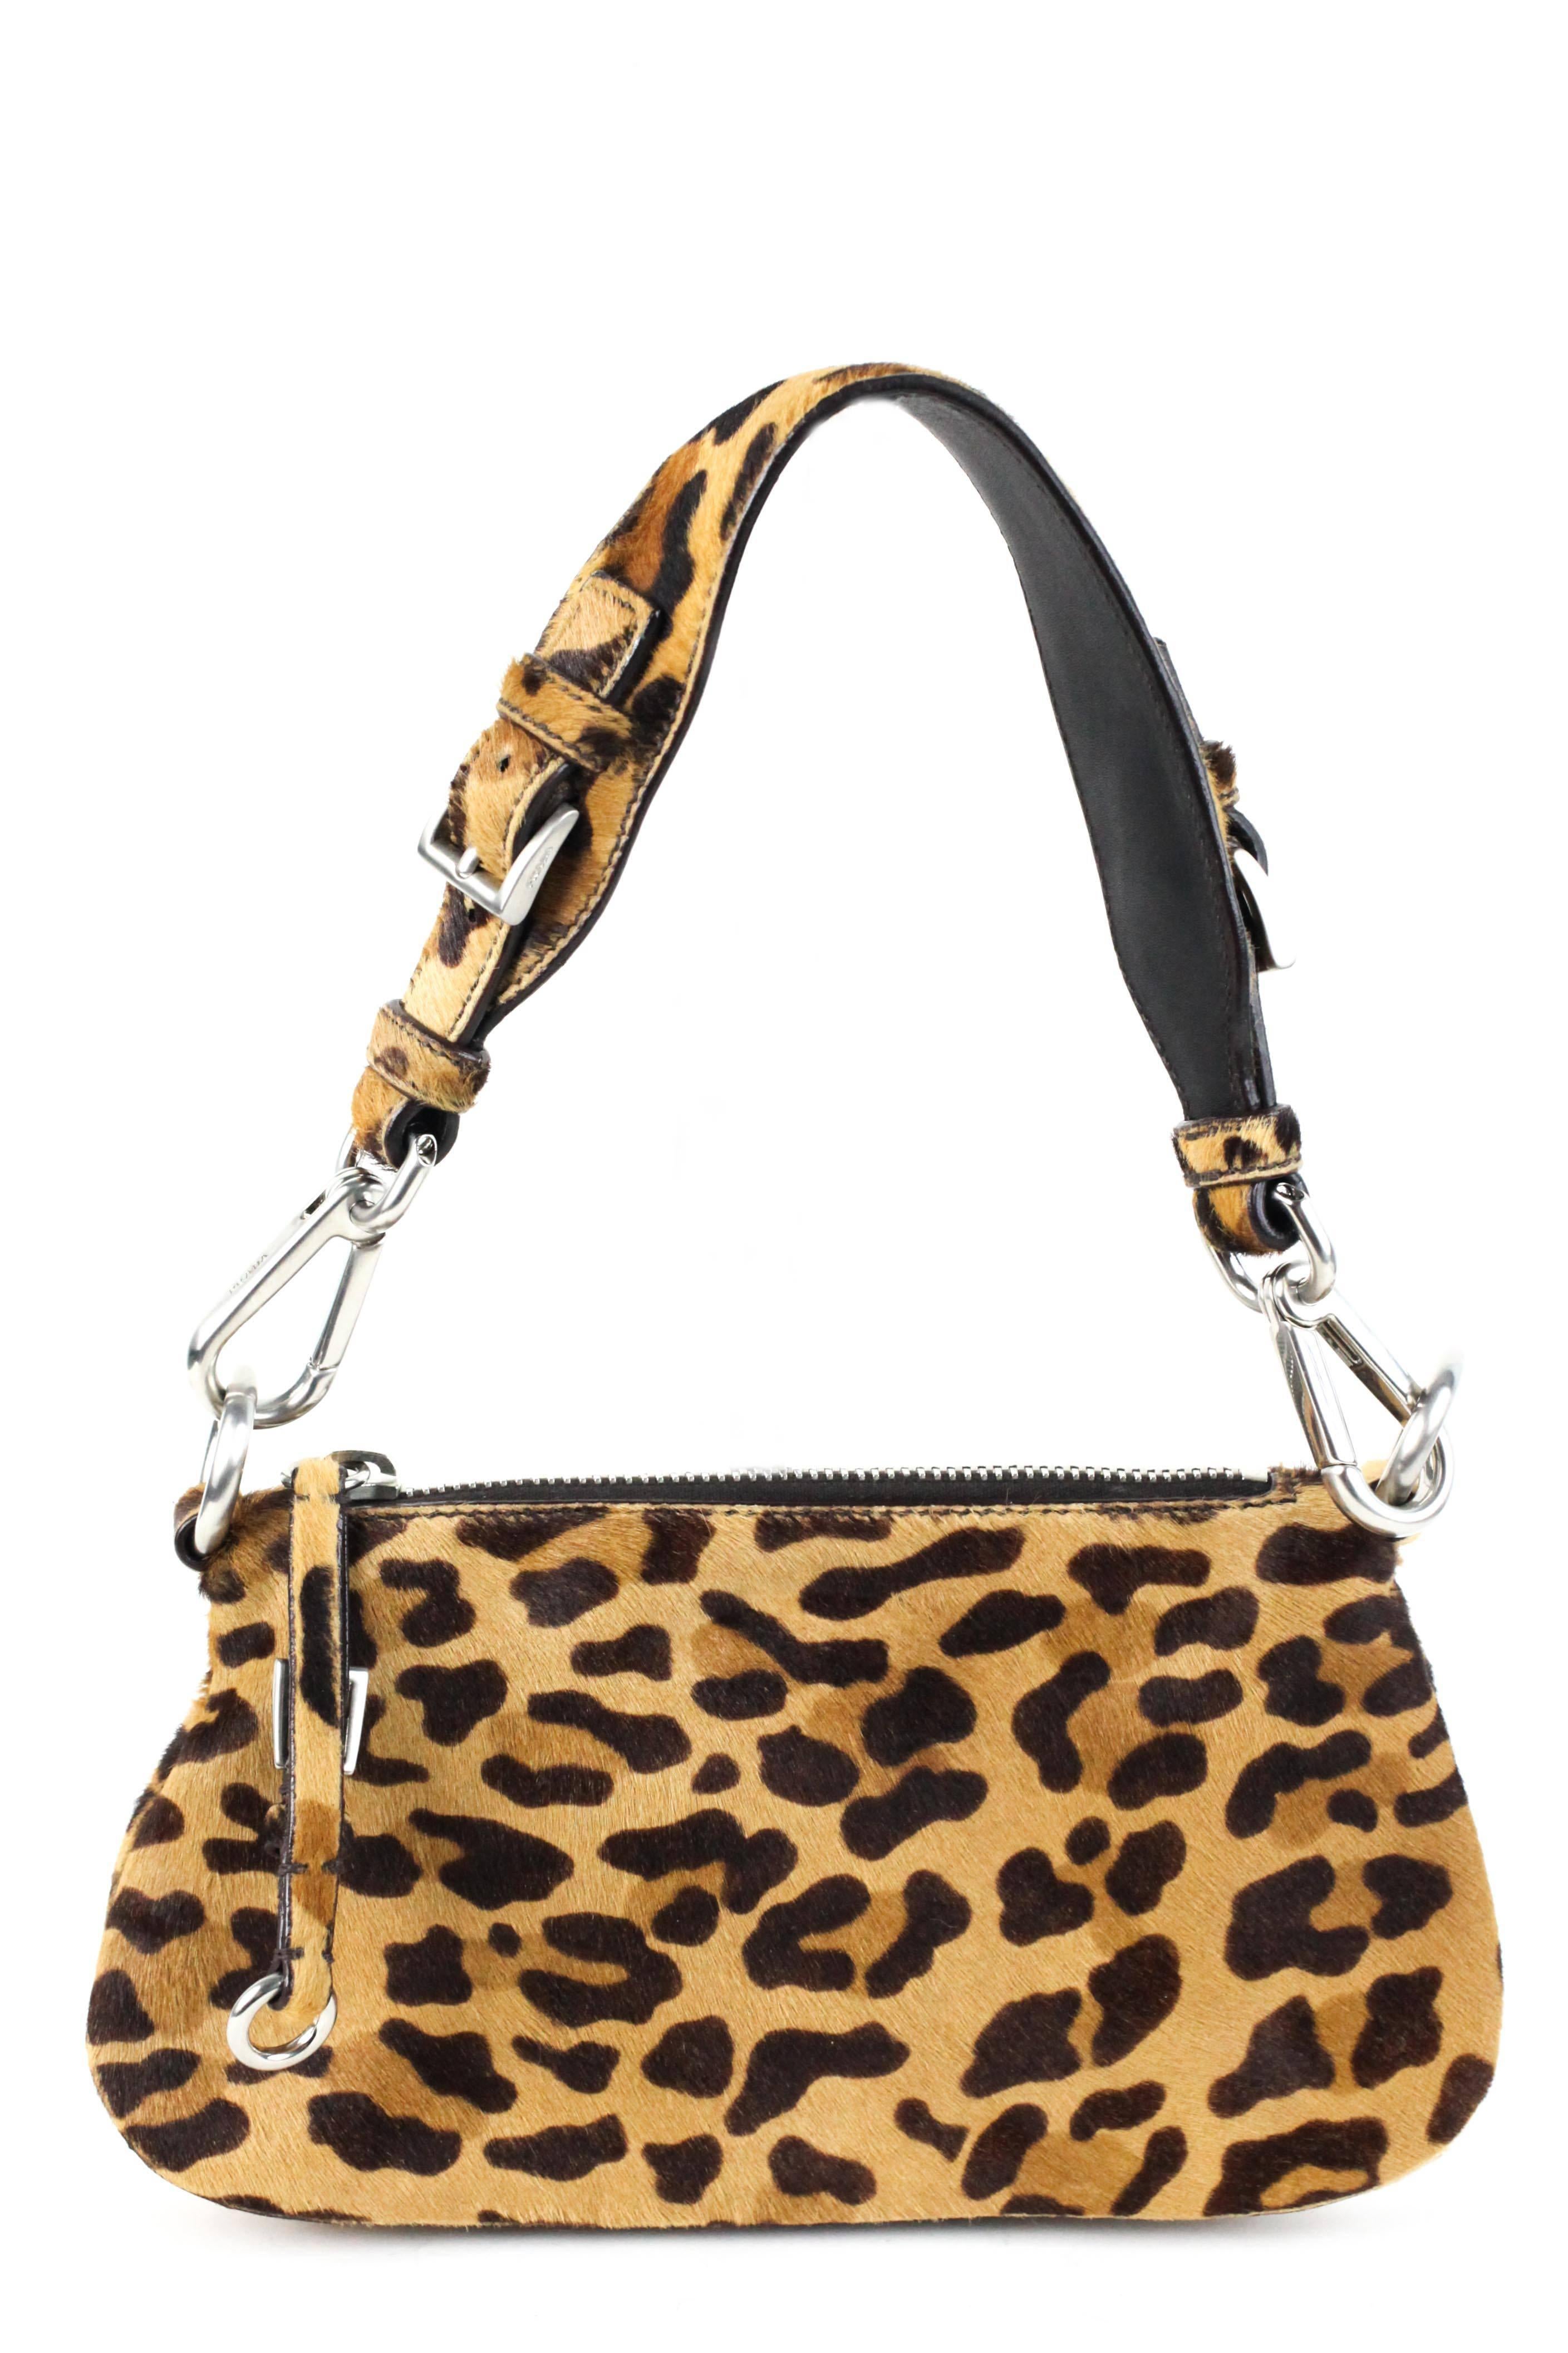 Prada Leopard Print Hair-calf Bag  5